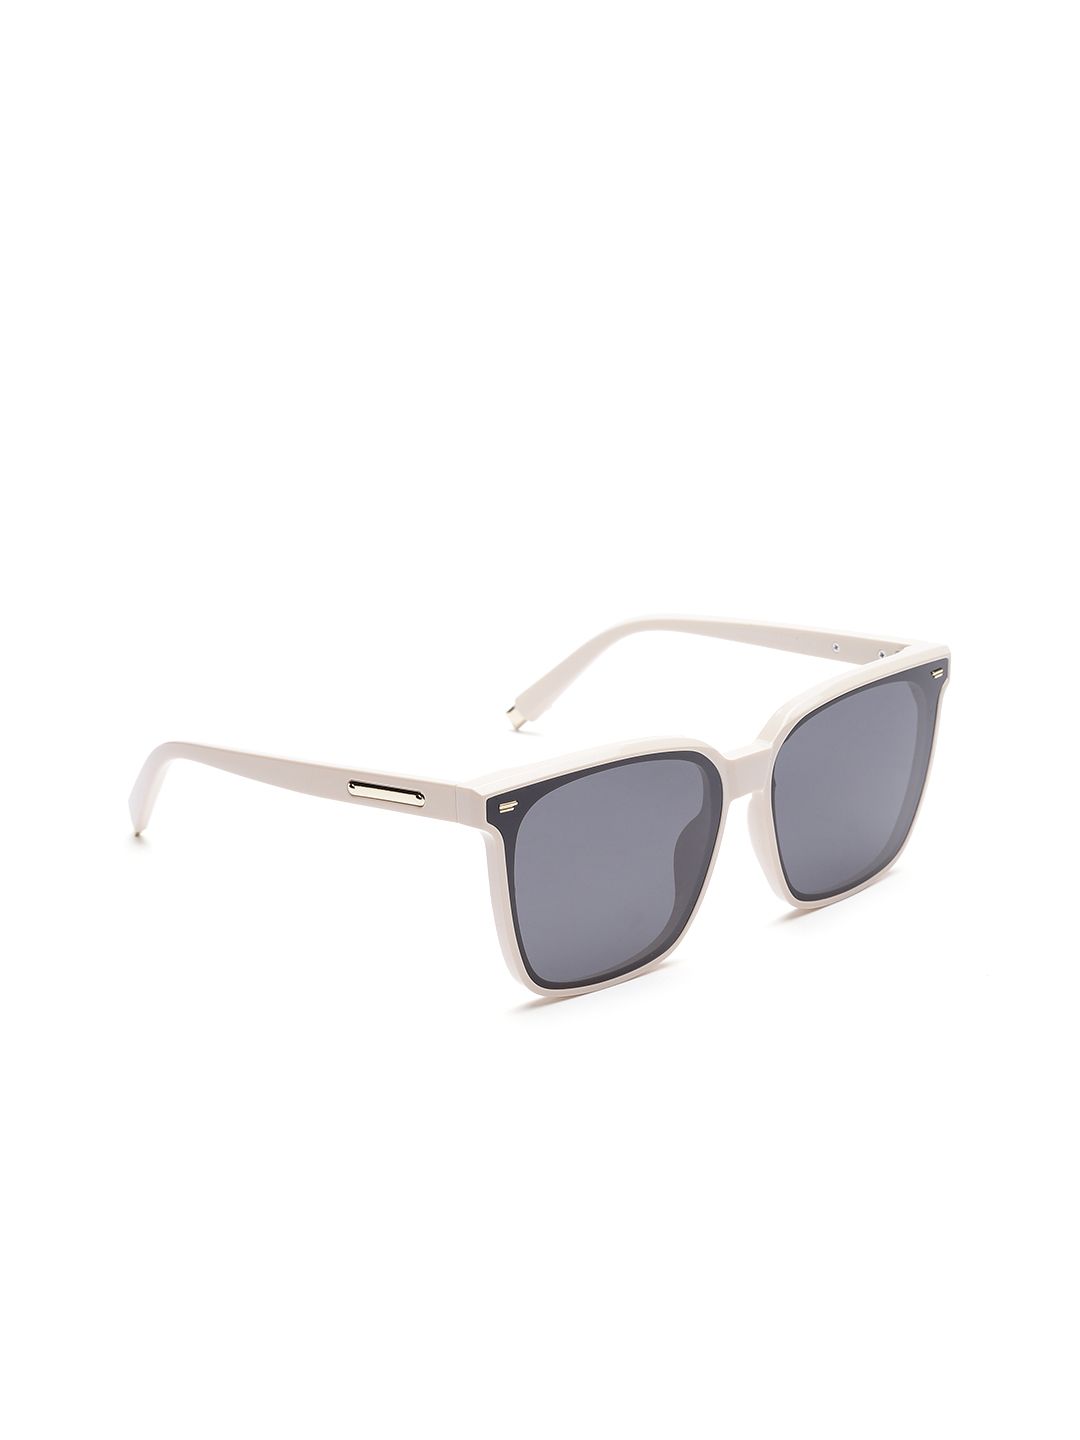 Carlton London Women Black Lens & Black Rectangle Sunglasses CLSW029 Price in India